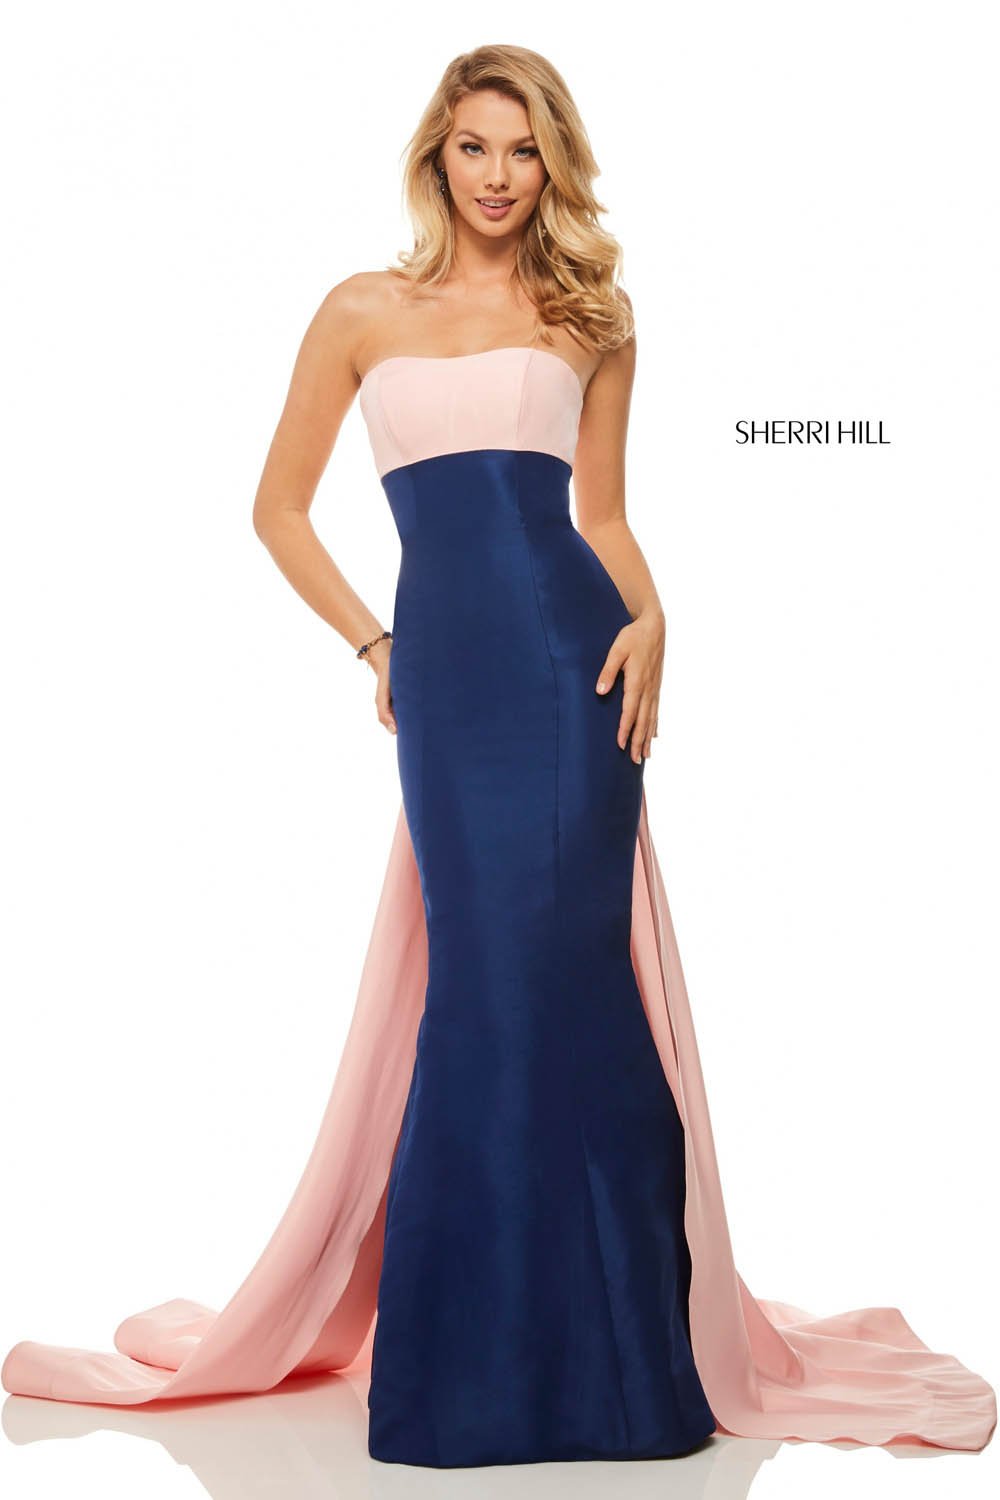 Sherri Hill 52845 dress images in these colors: Black, Light Blue, Ivory, Red, Fuchsia, Orange, Blush Navy.